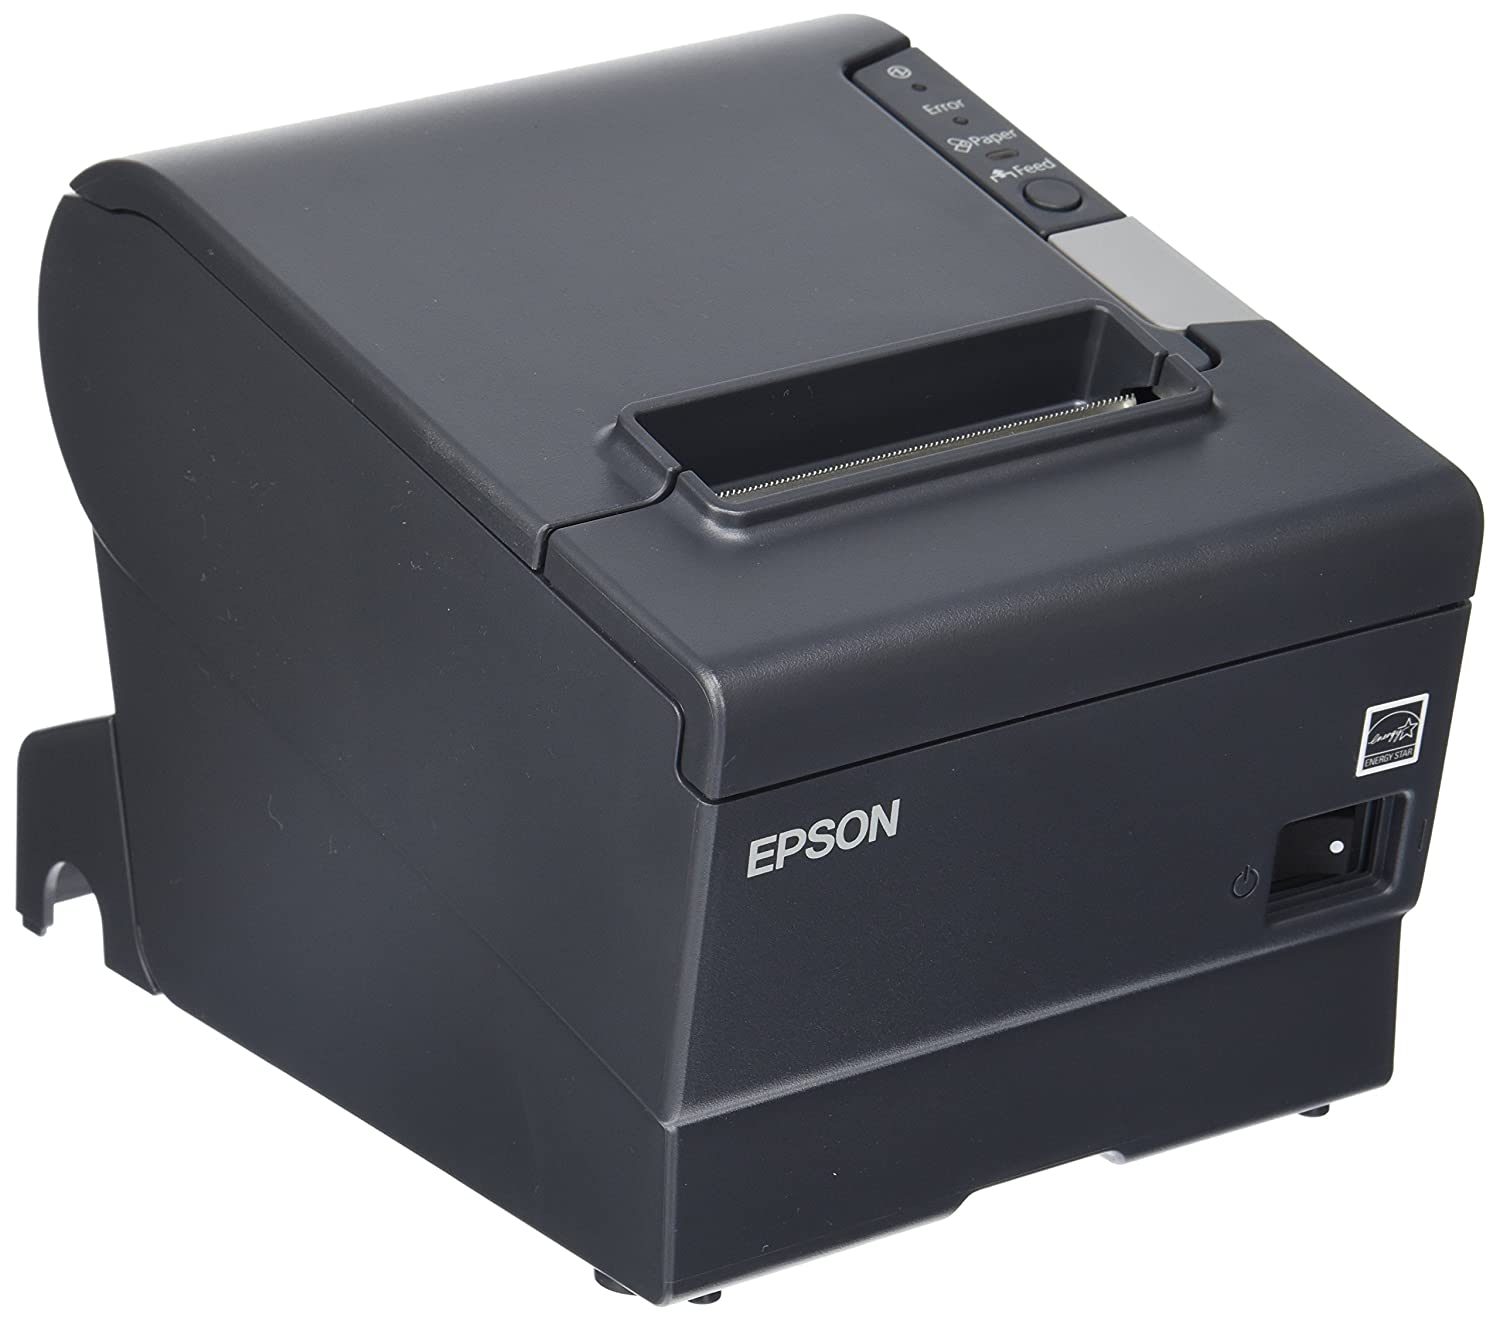 Epson TM-T88V Thermal Receipt Printer Drivers Download SourceDrivers.com - Drivers